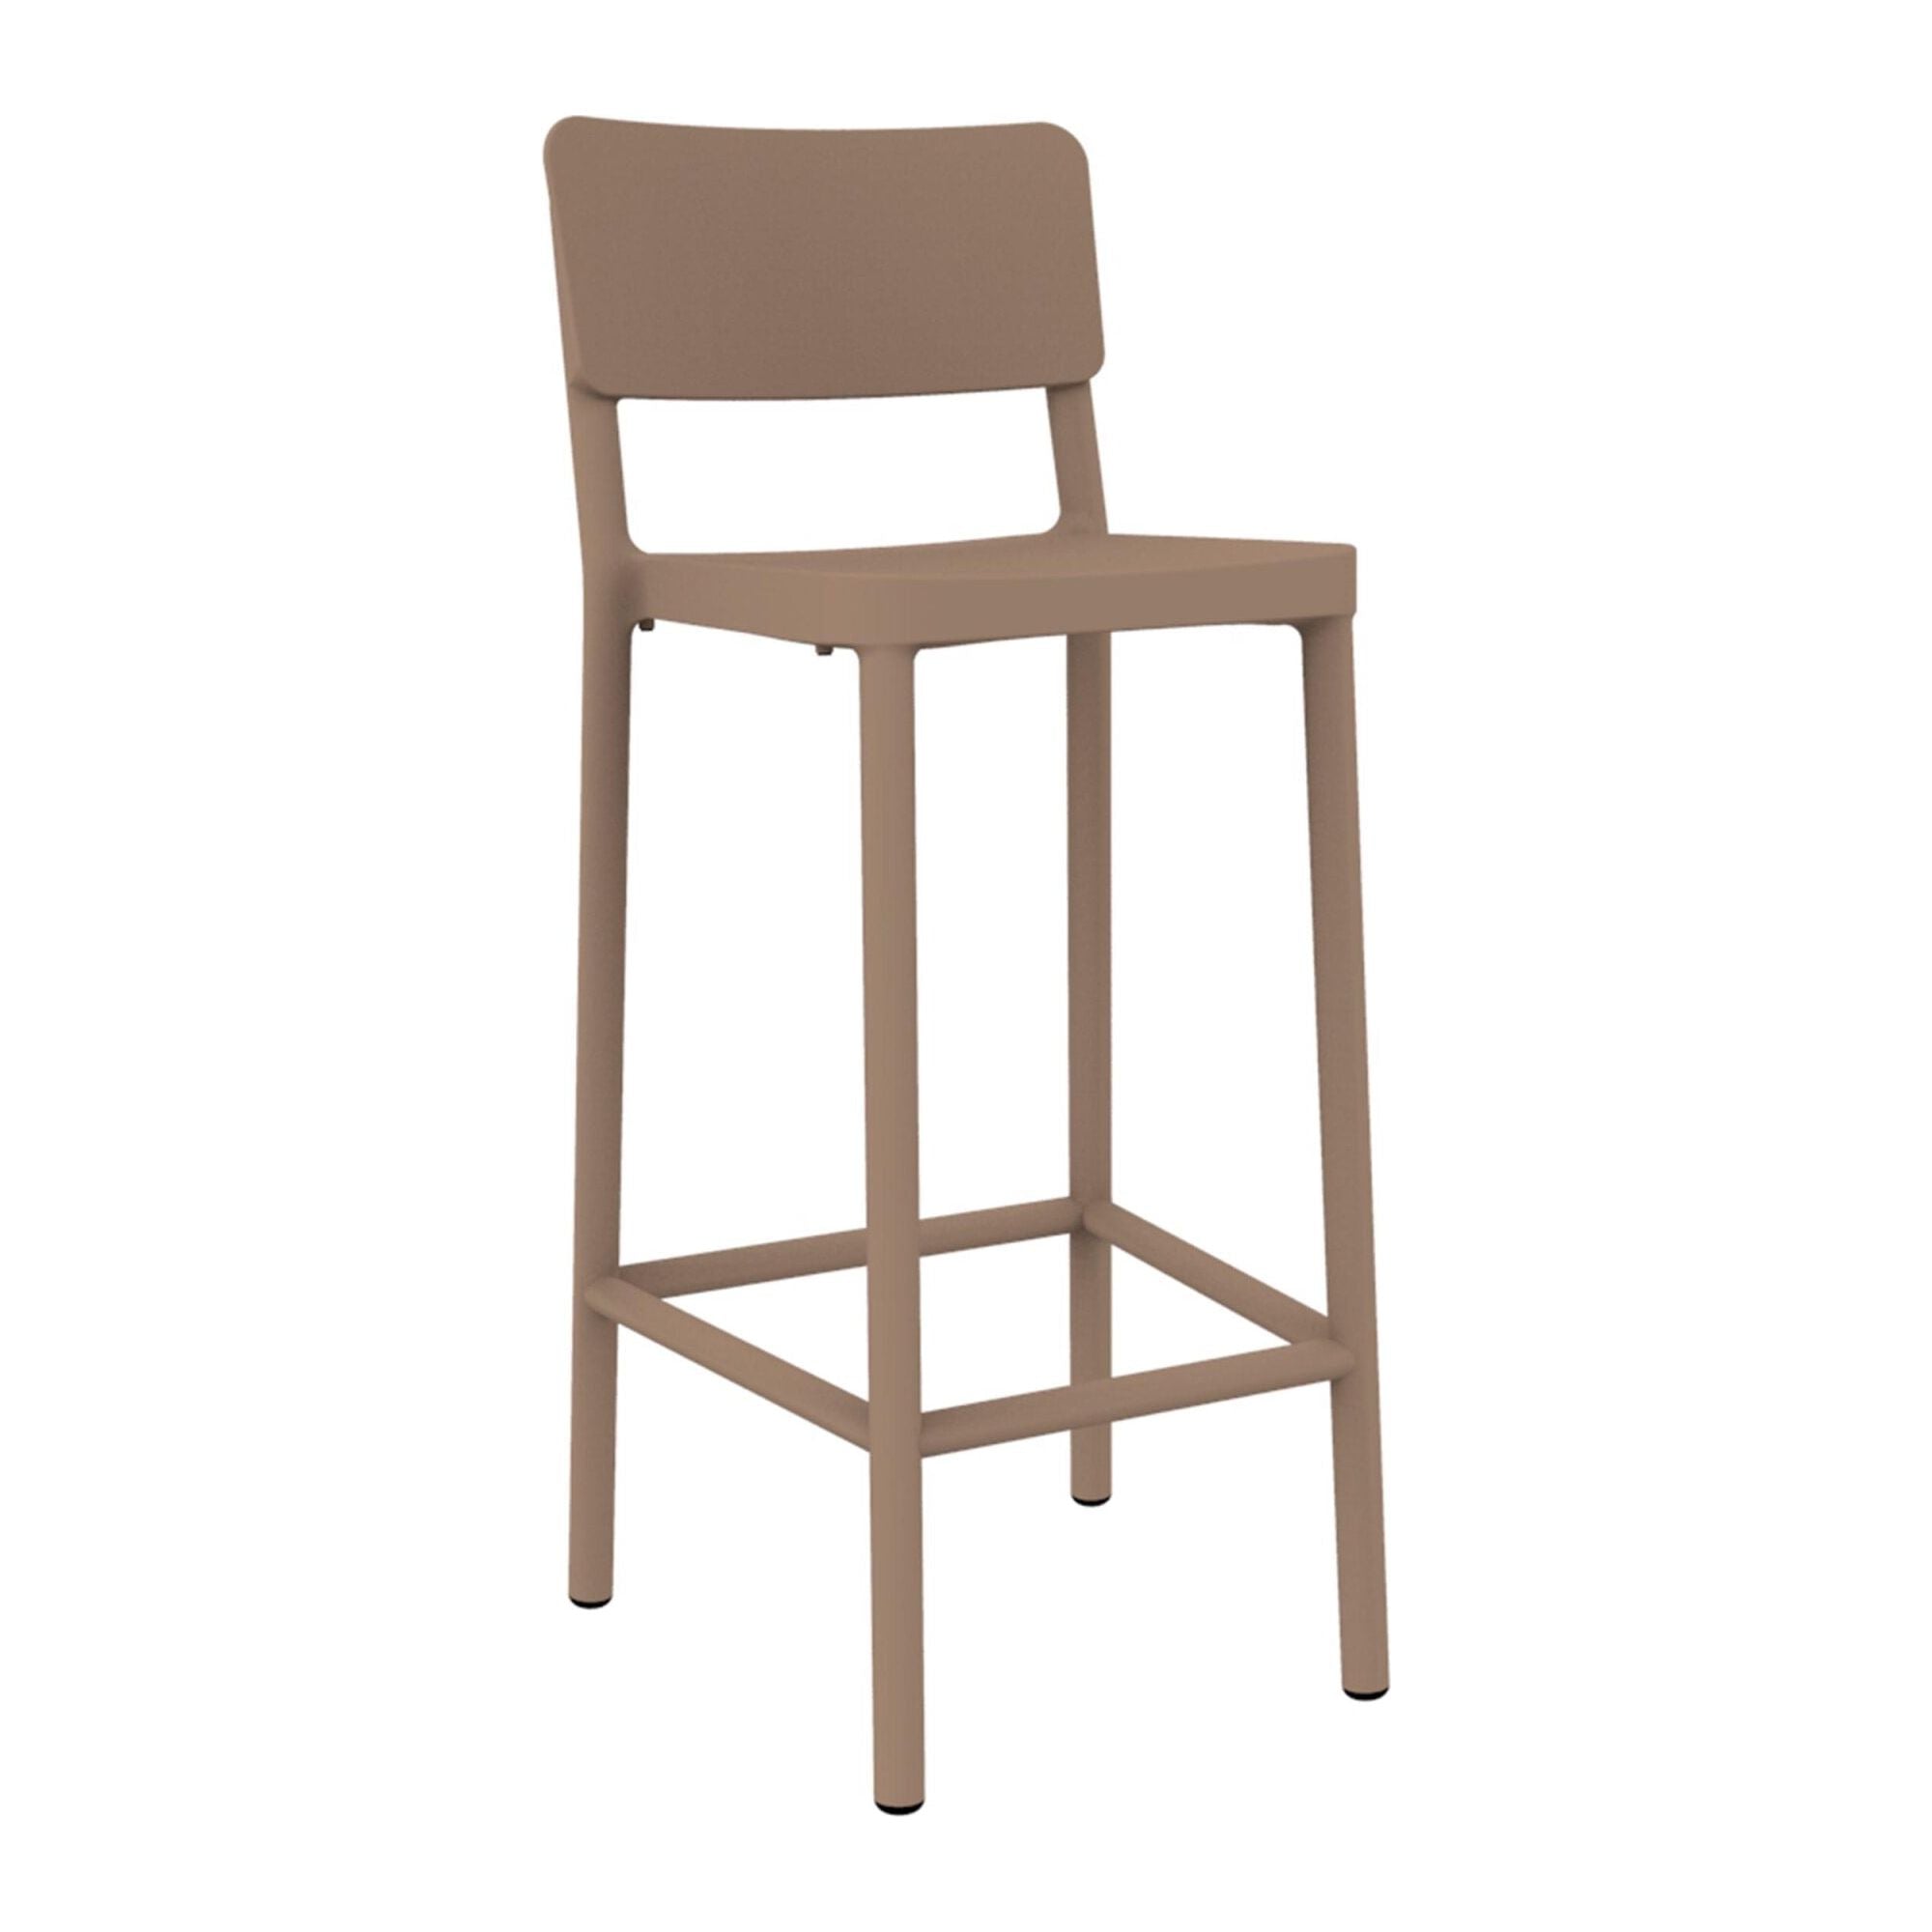 Resol lisboa high chair indoors, sand outdoors